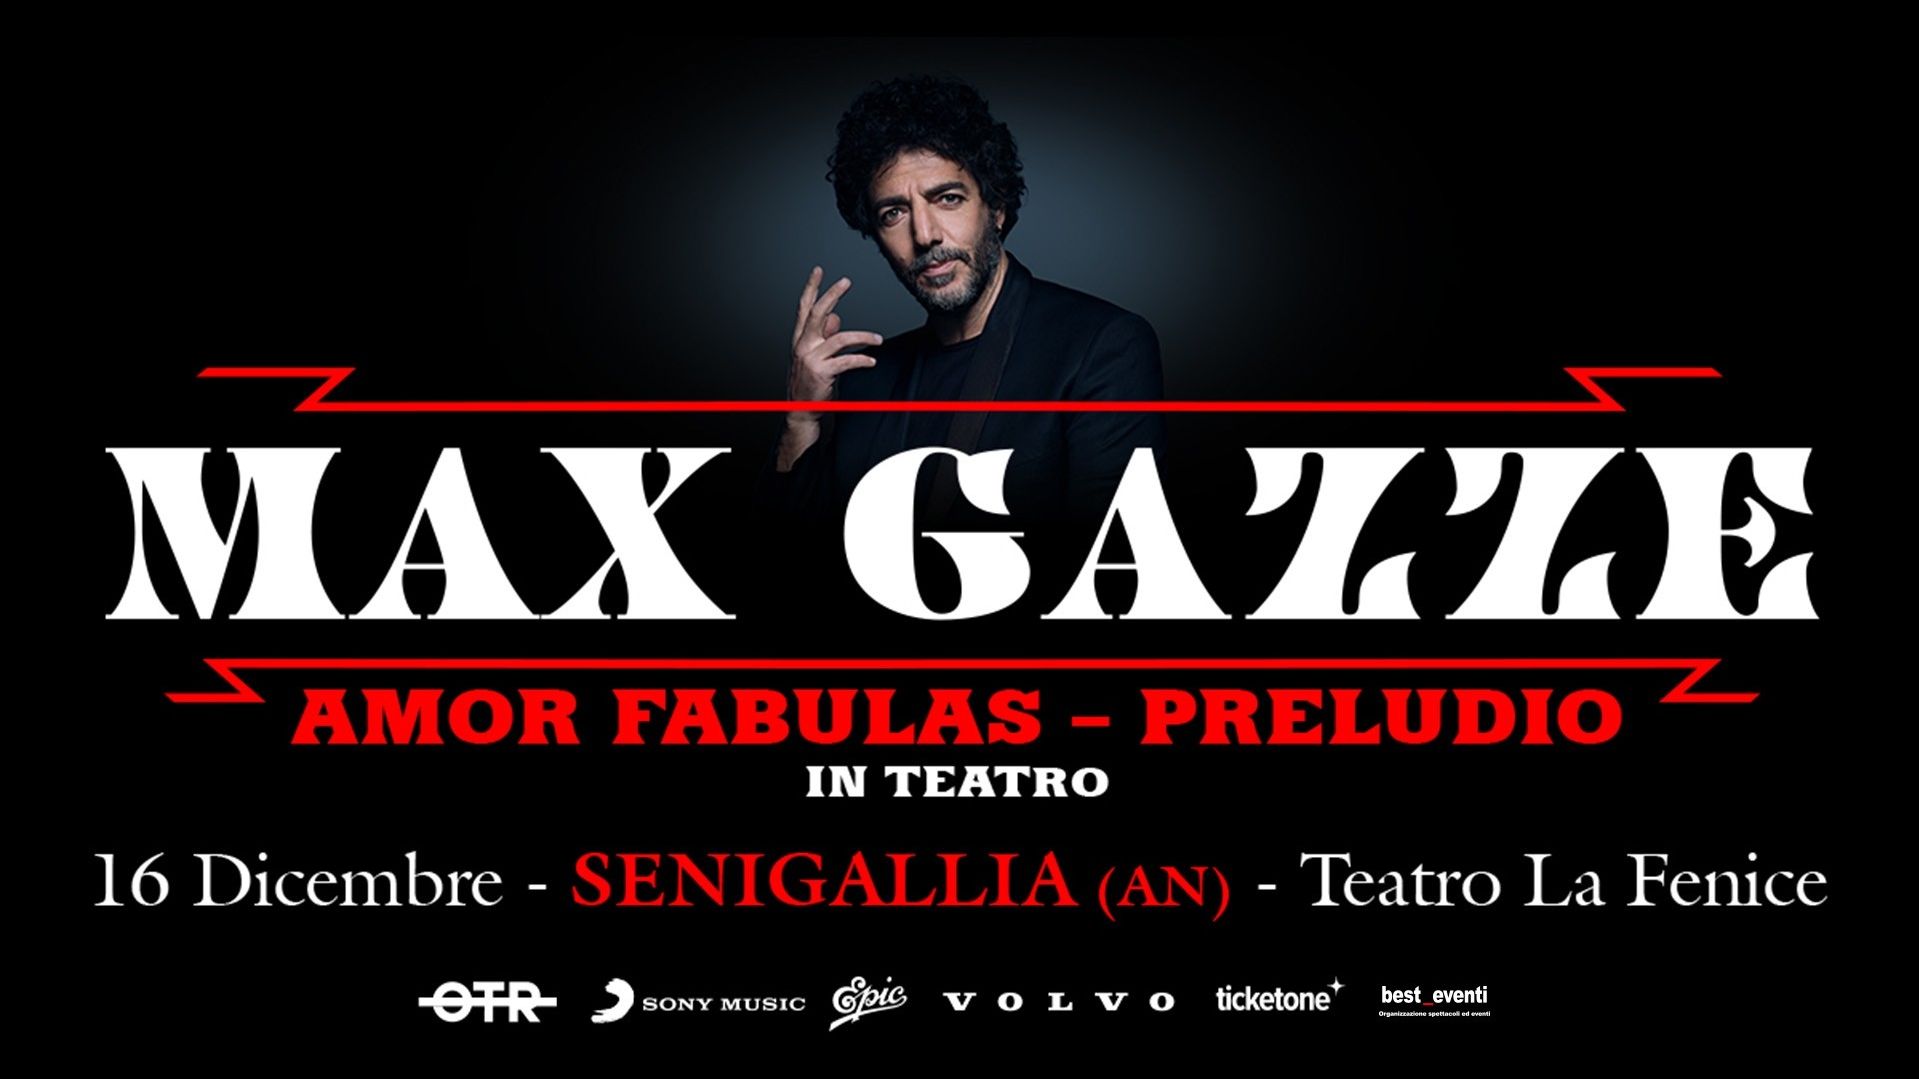 Max Gazzè "Amor Fabulas - Preludio"